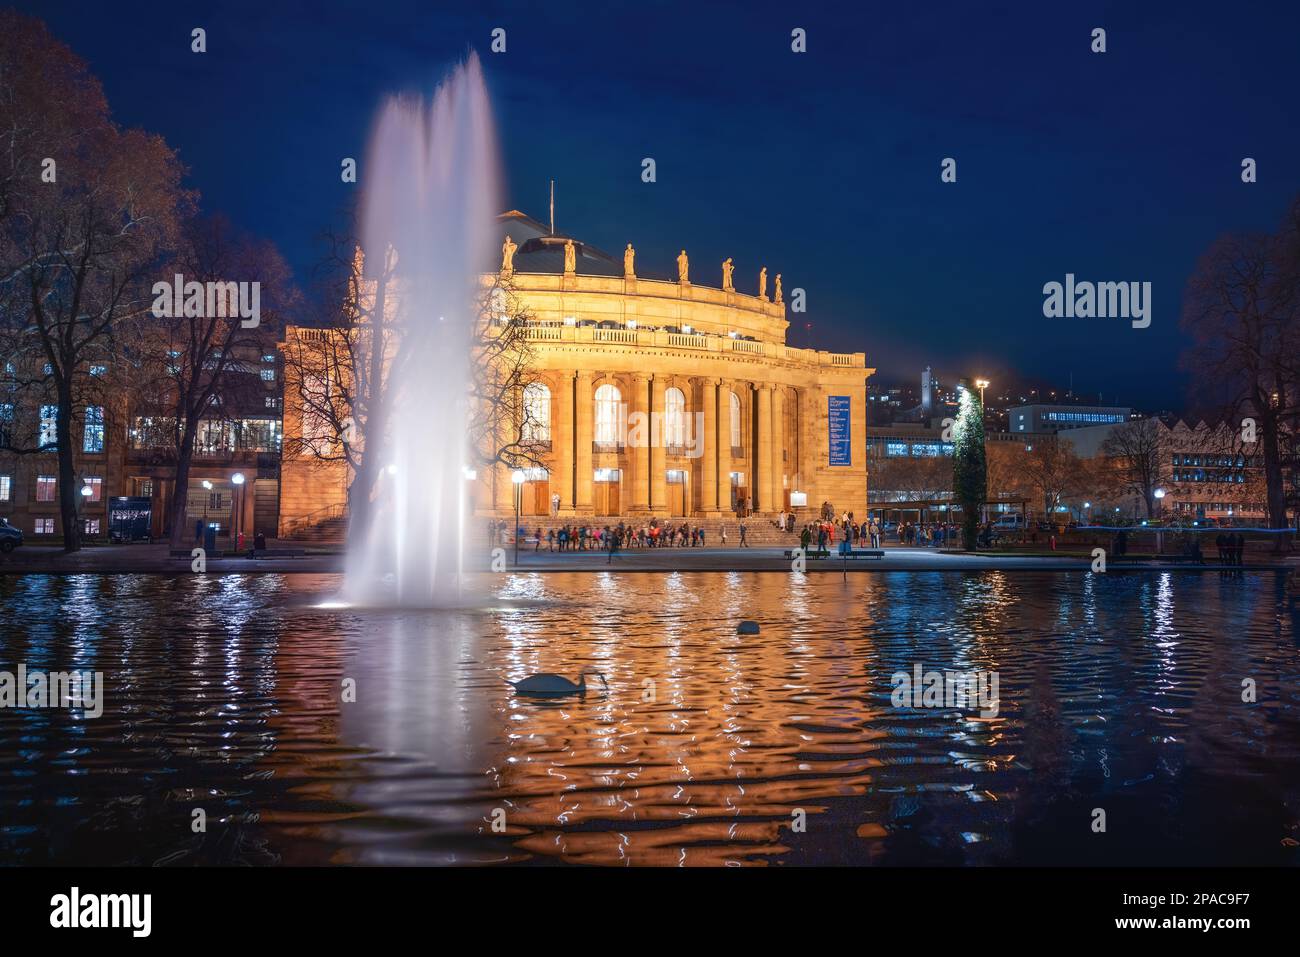 Stuttgart Opera House (Staatstheater) and Eckensee lake at night - Stuttgart, Germany Stock Photo